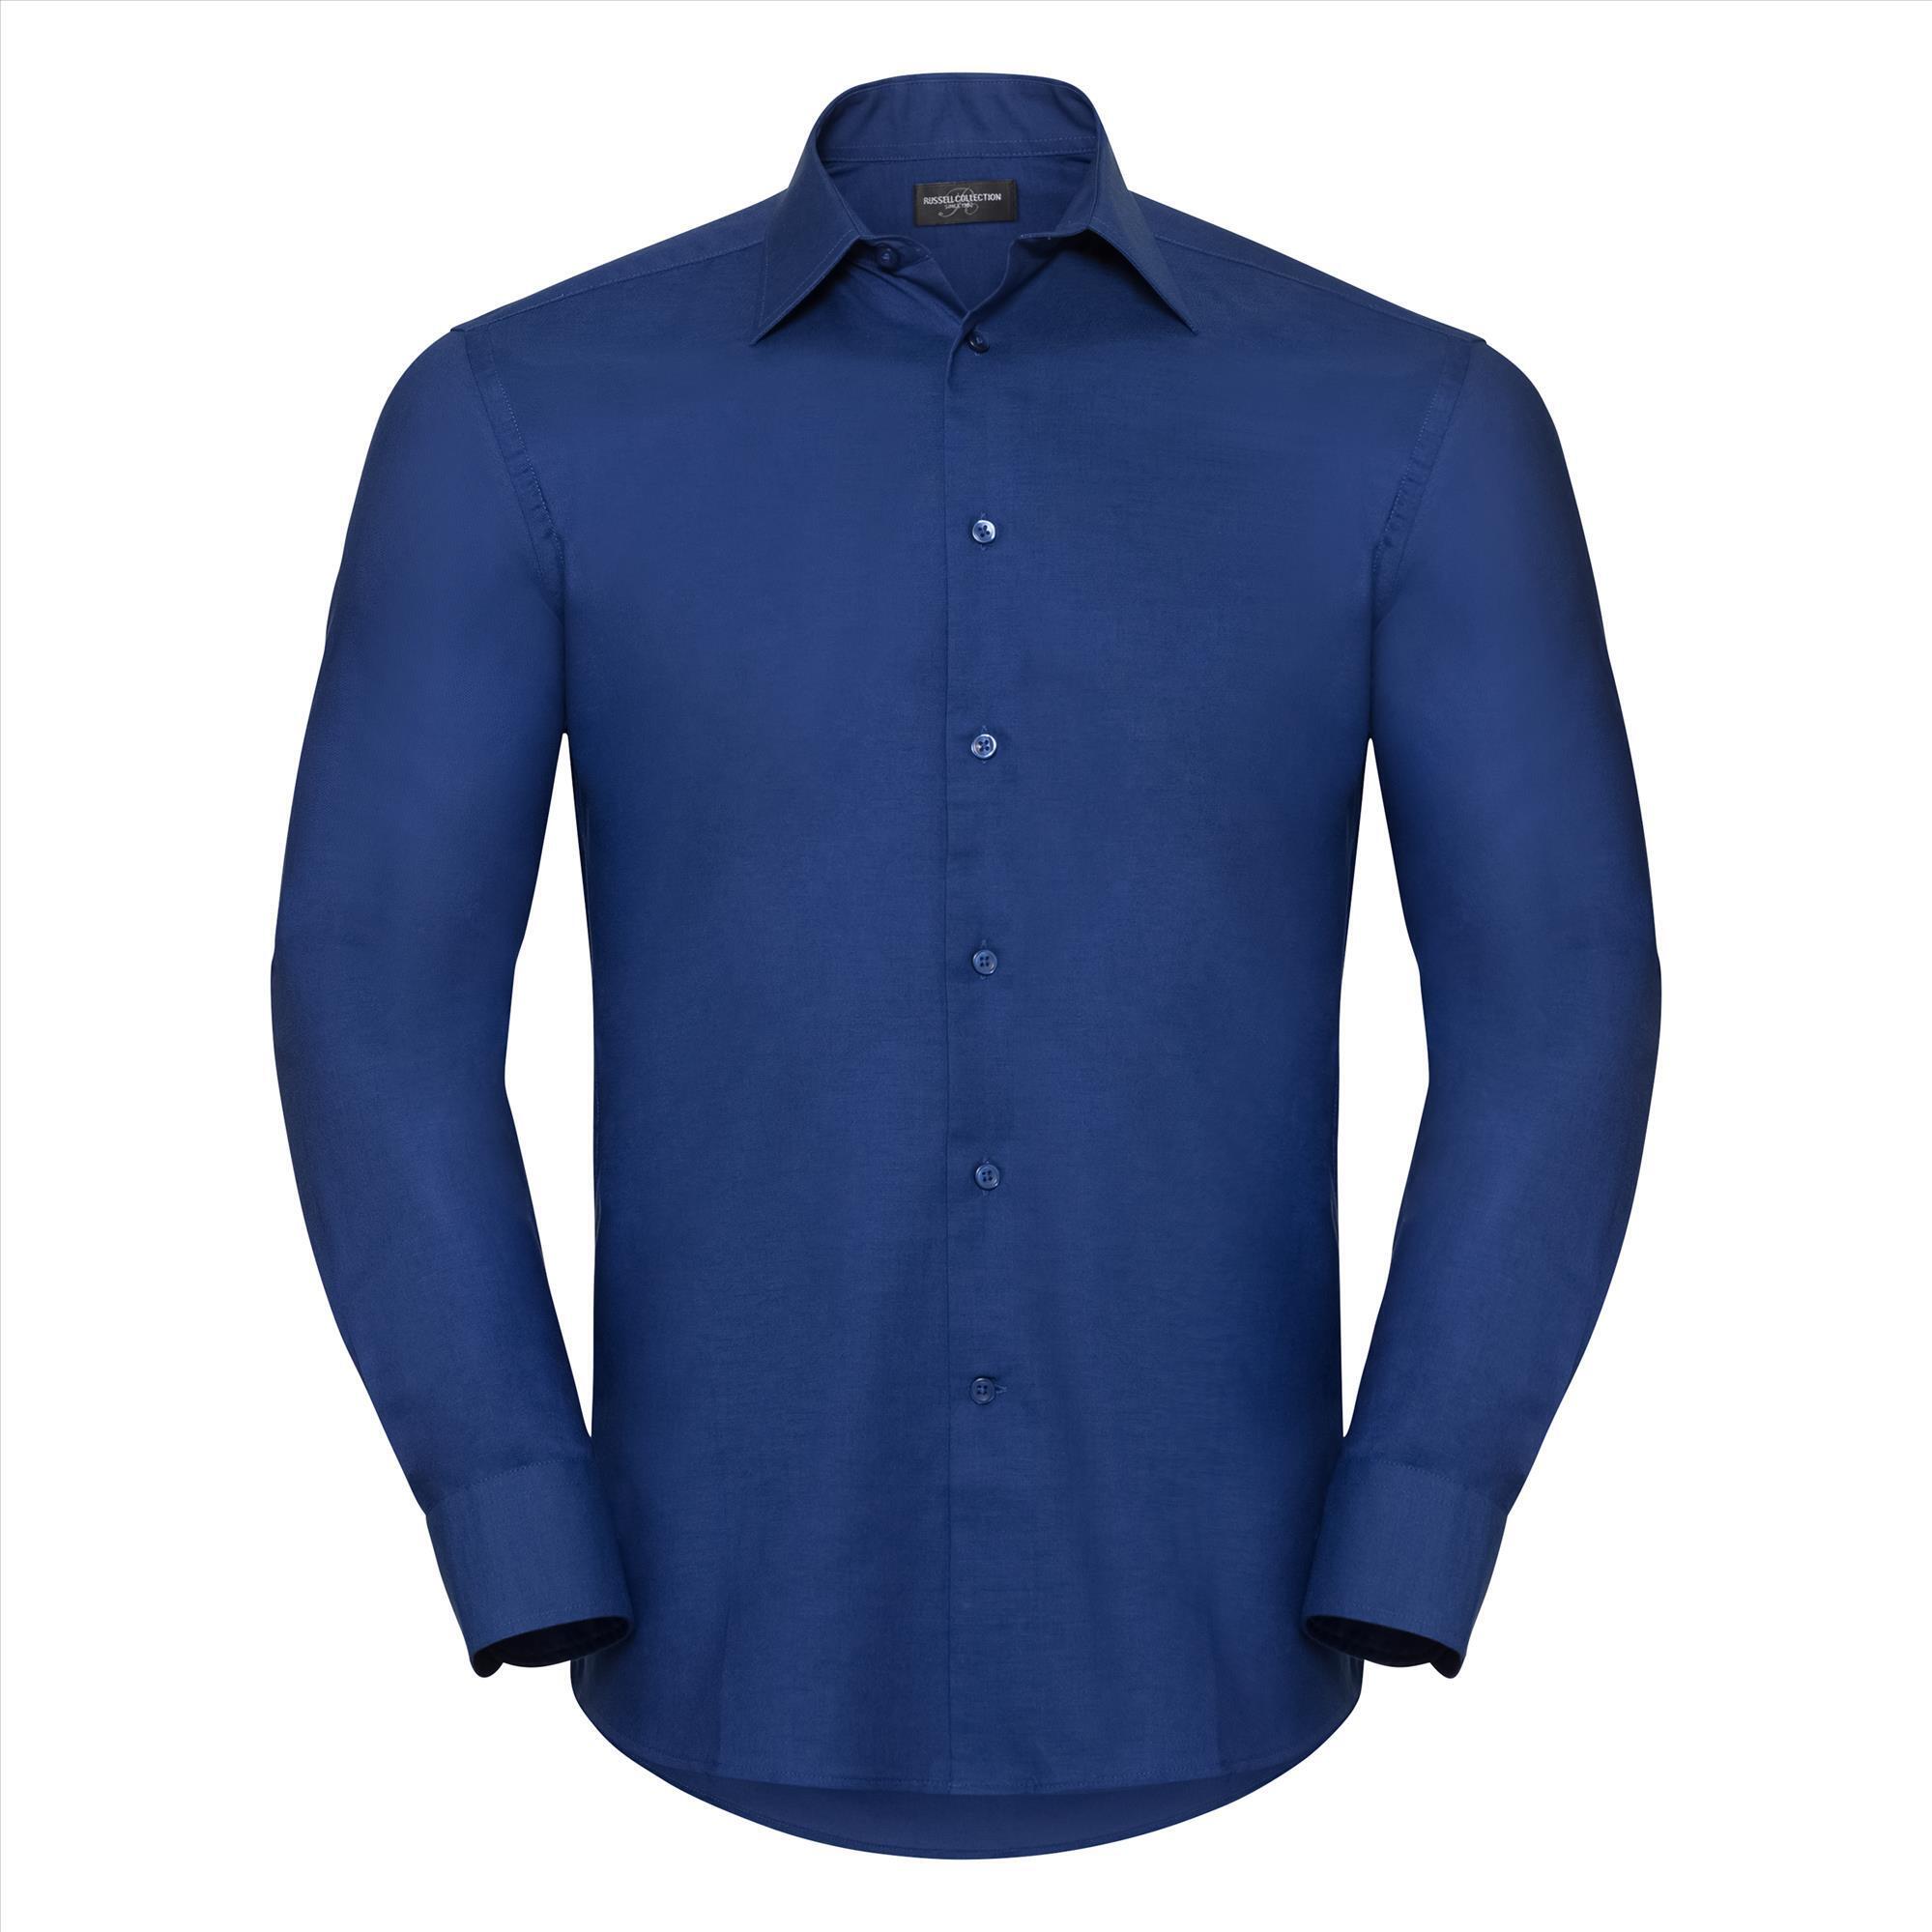 Heren overhemd royal blauw zakelijk overhemd